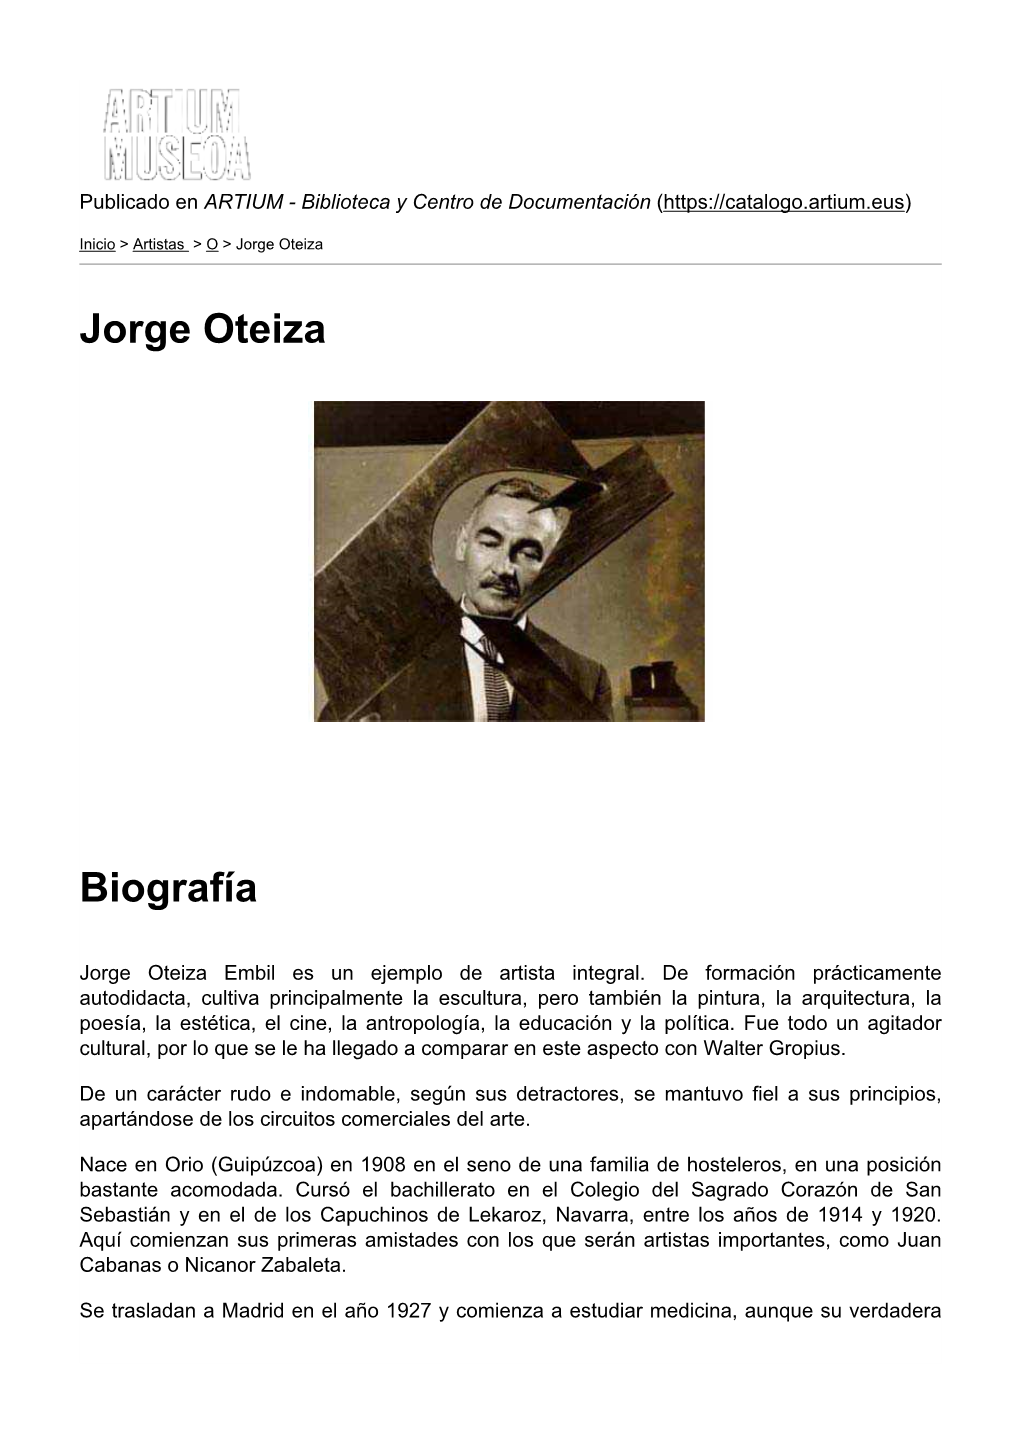 Jorge Oteiza Biografía